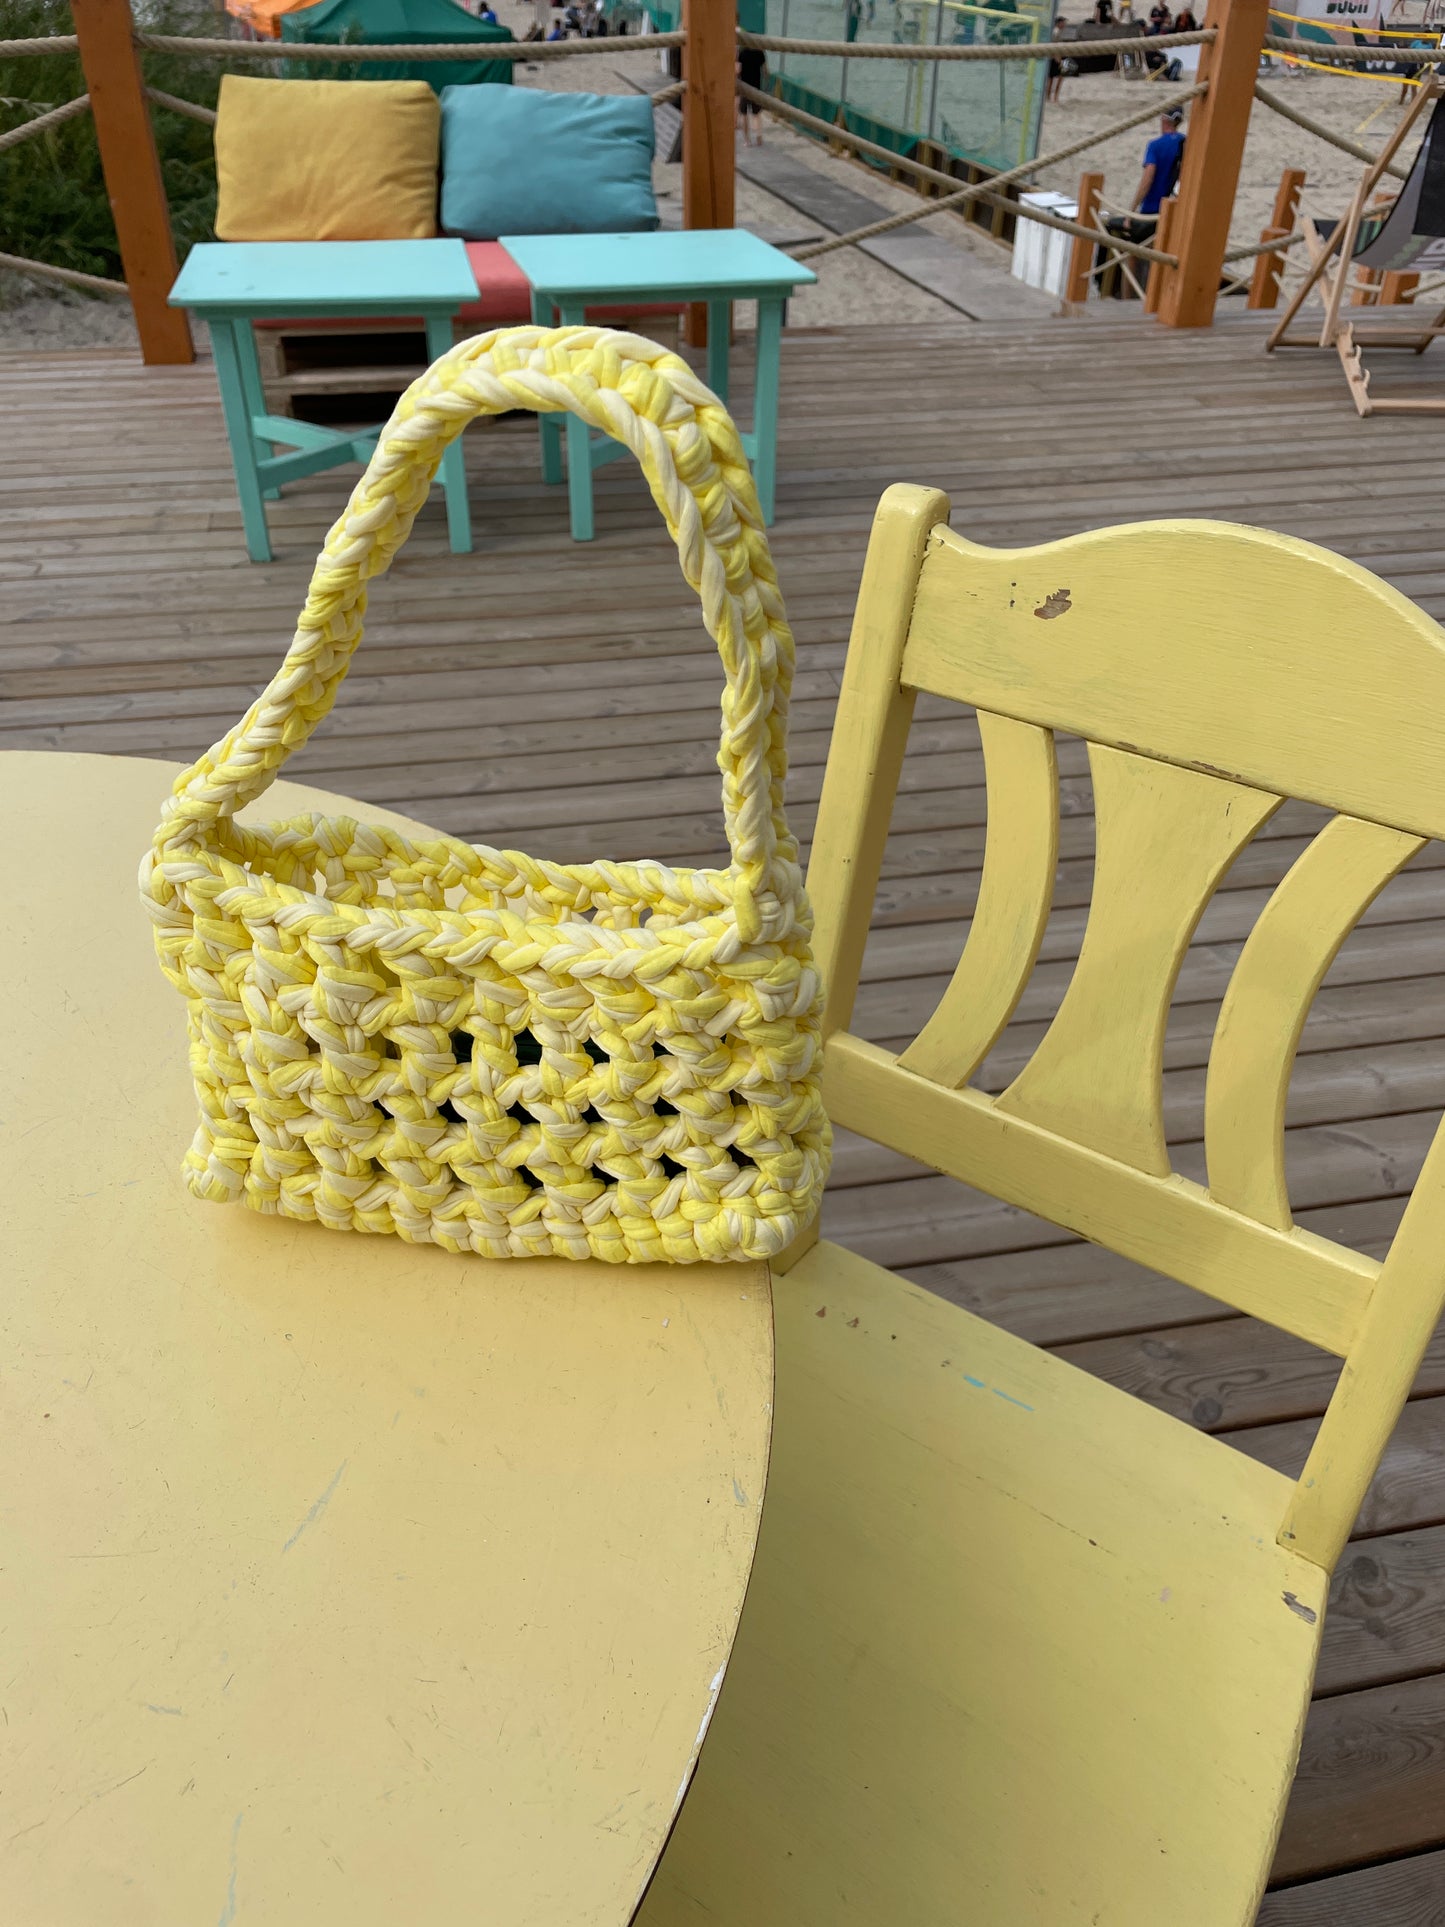 Pastel Yellow Crochet Bag - Mini TOM Bag